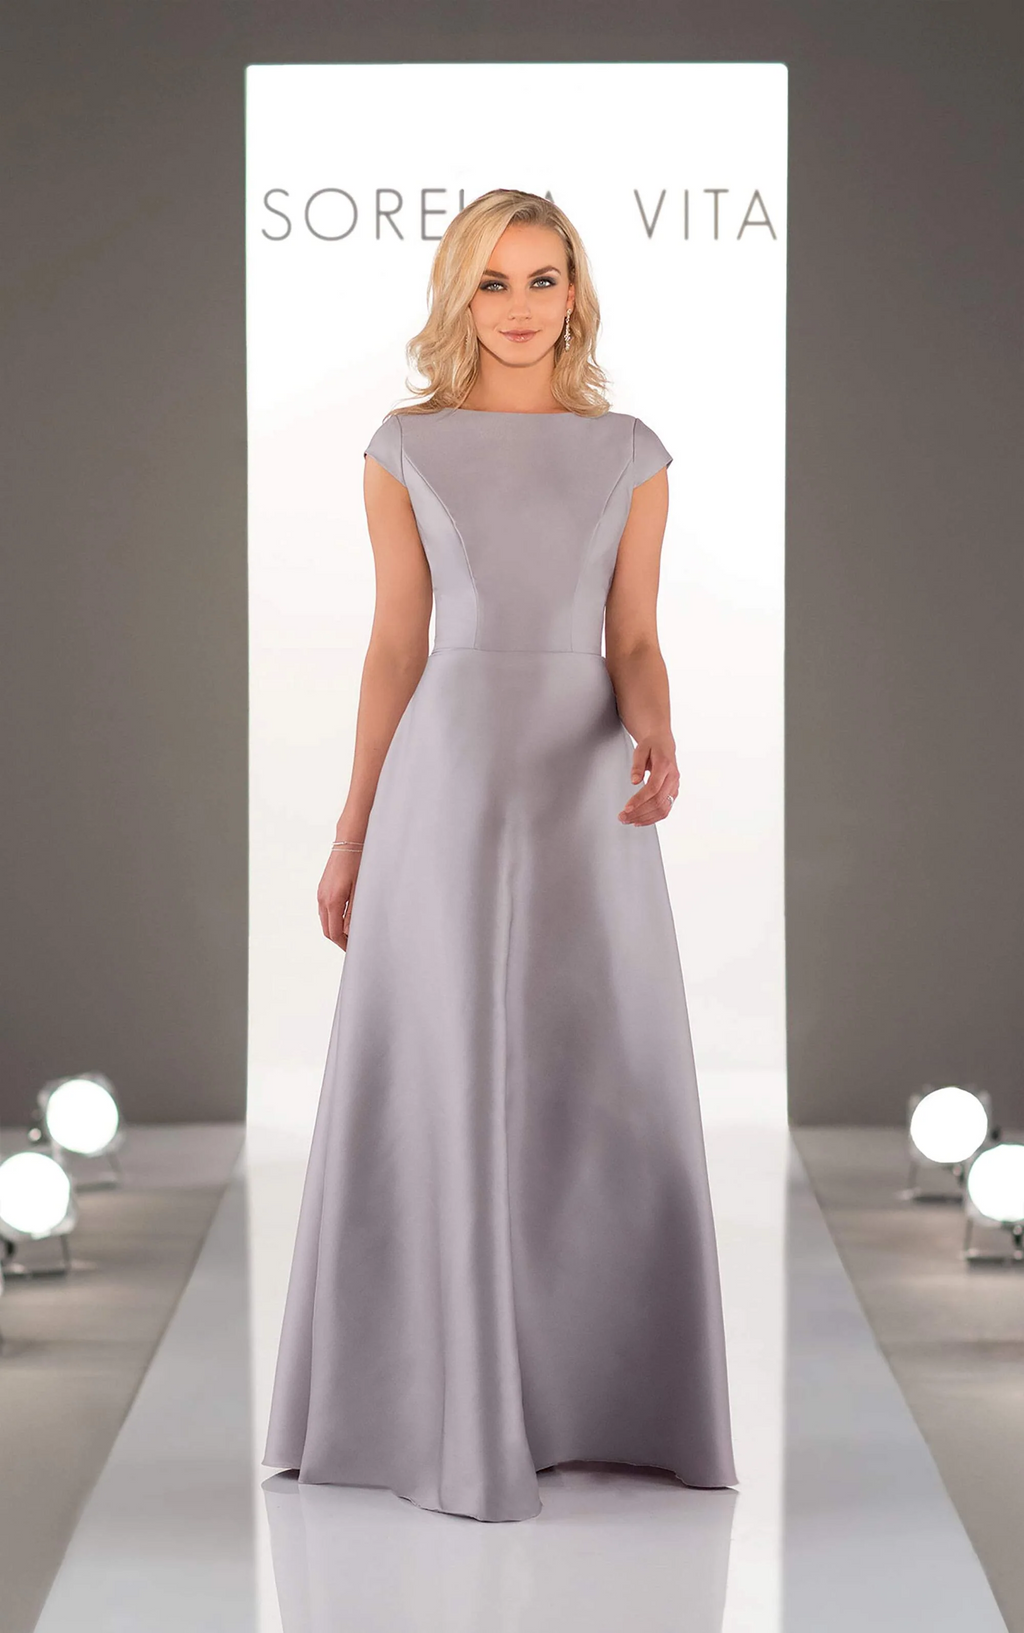 Sorella Vita Dress Style 8980 (French Lilac-size 12) Prom, Ball., Black-tie, Bridesmaid, Pageant